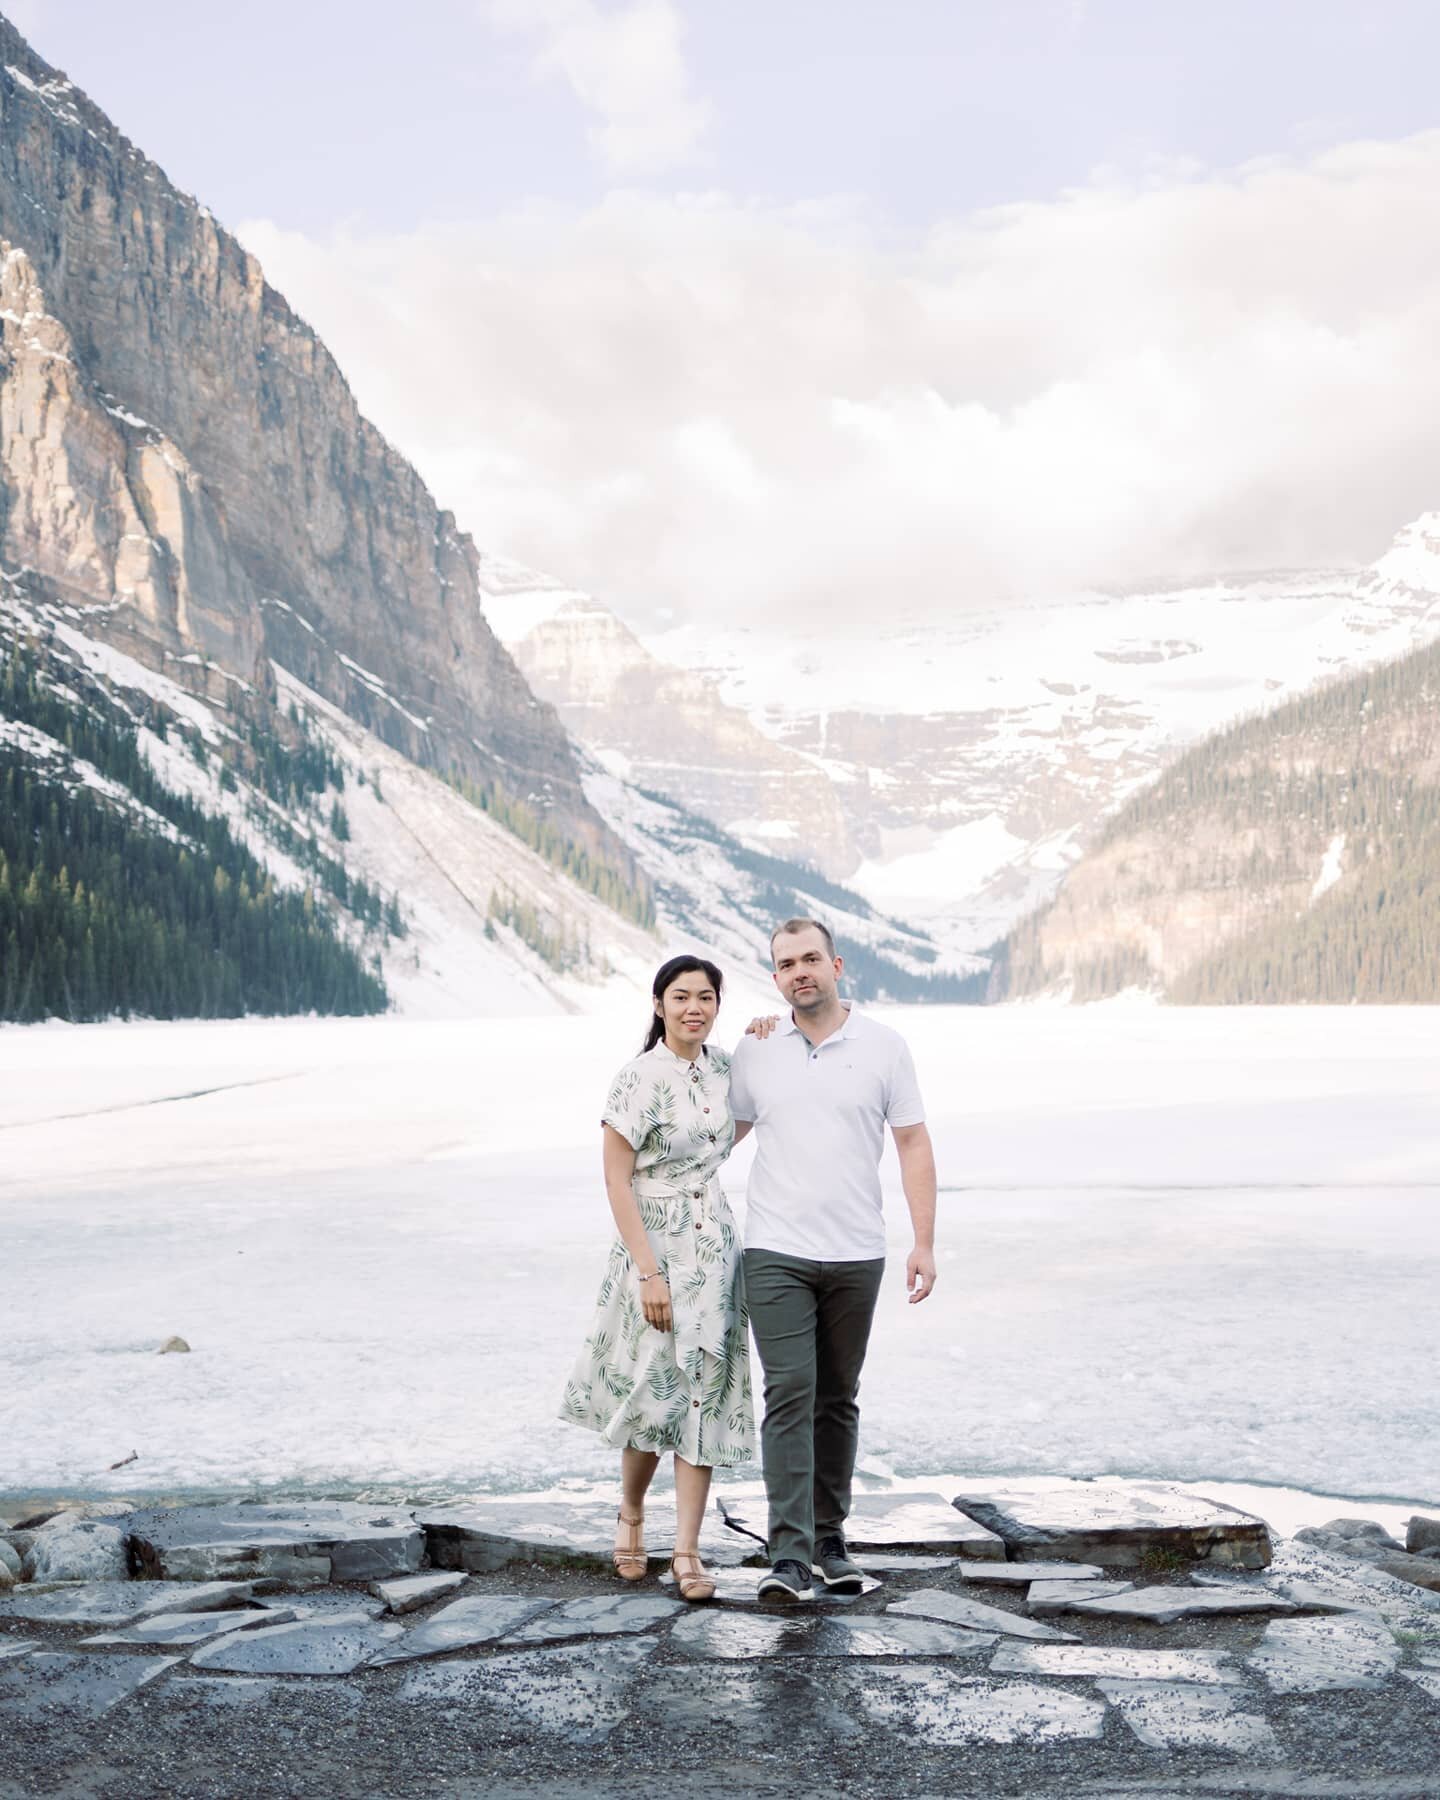 Chris &amp; Azell

#Canada #Banff #LakeLouise #JayMayugaPhoto #JayMayugaPhotography